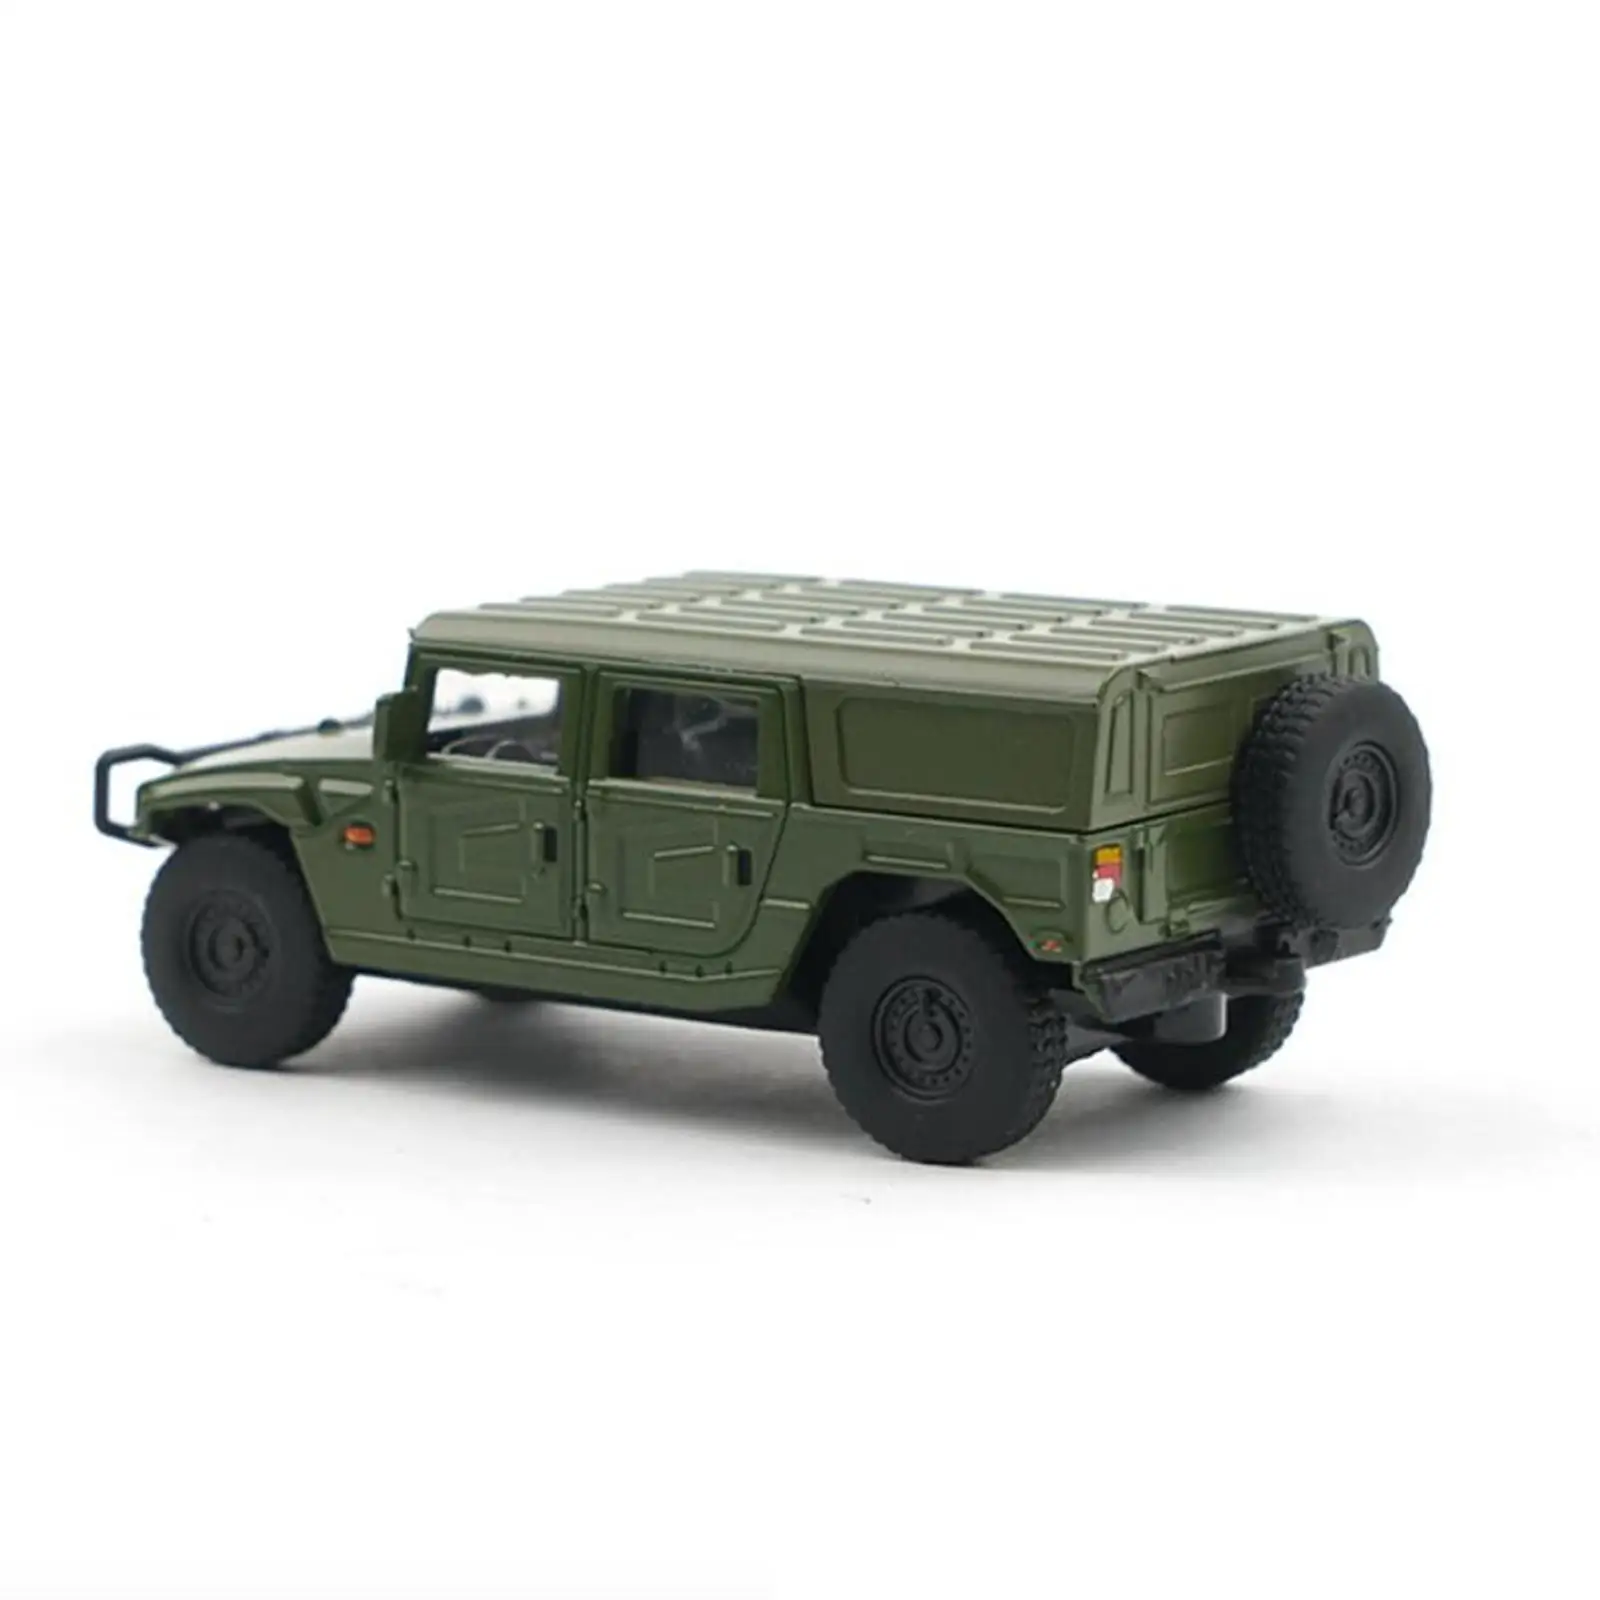 1/64 Car Model Figure Mini Vehicles Toys Collection Diorama Scenes for Scenery Landscape